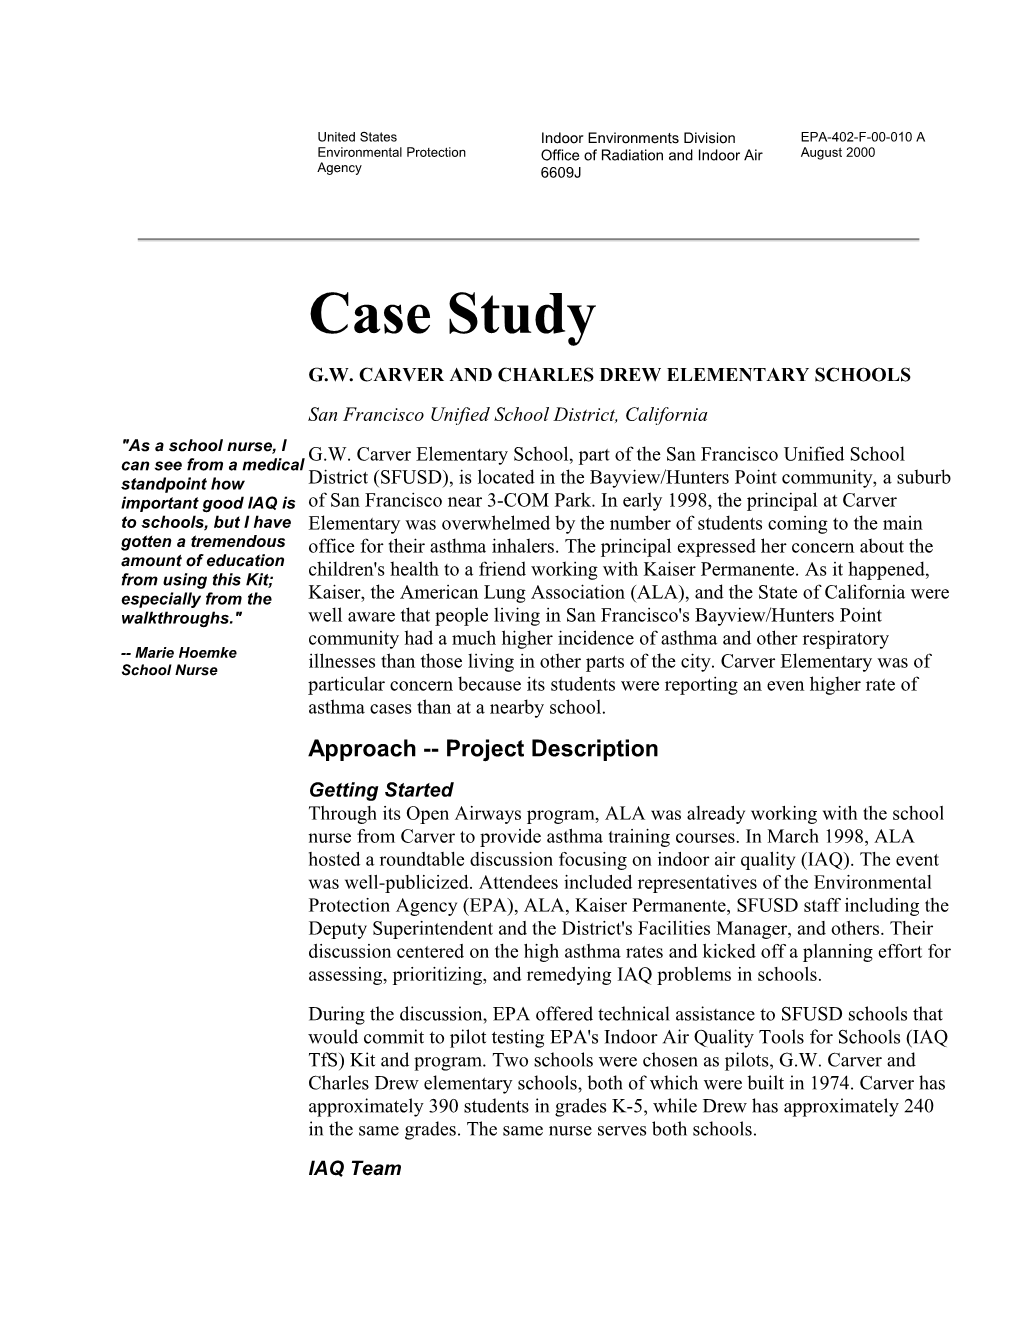 EPA Case Study - San Francisco